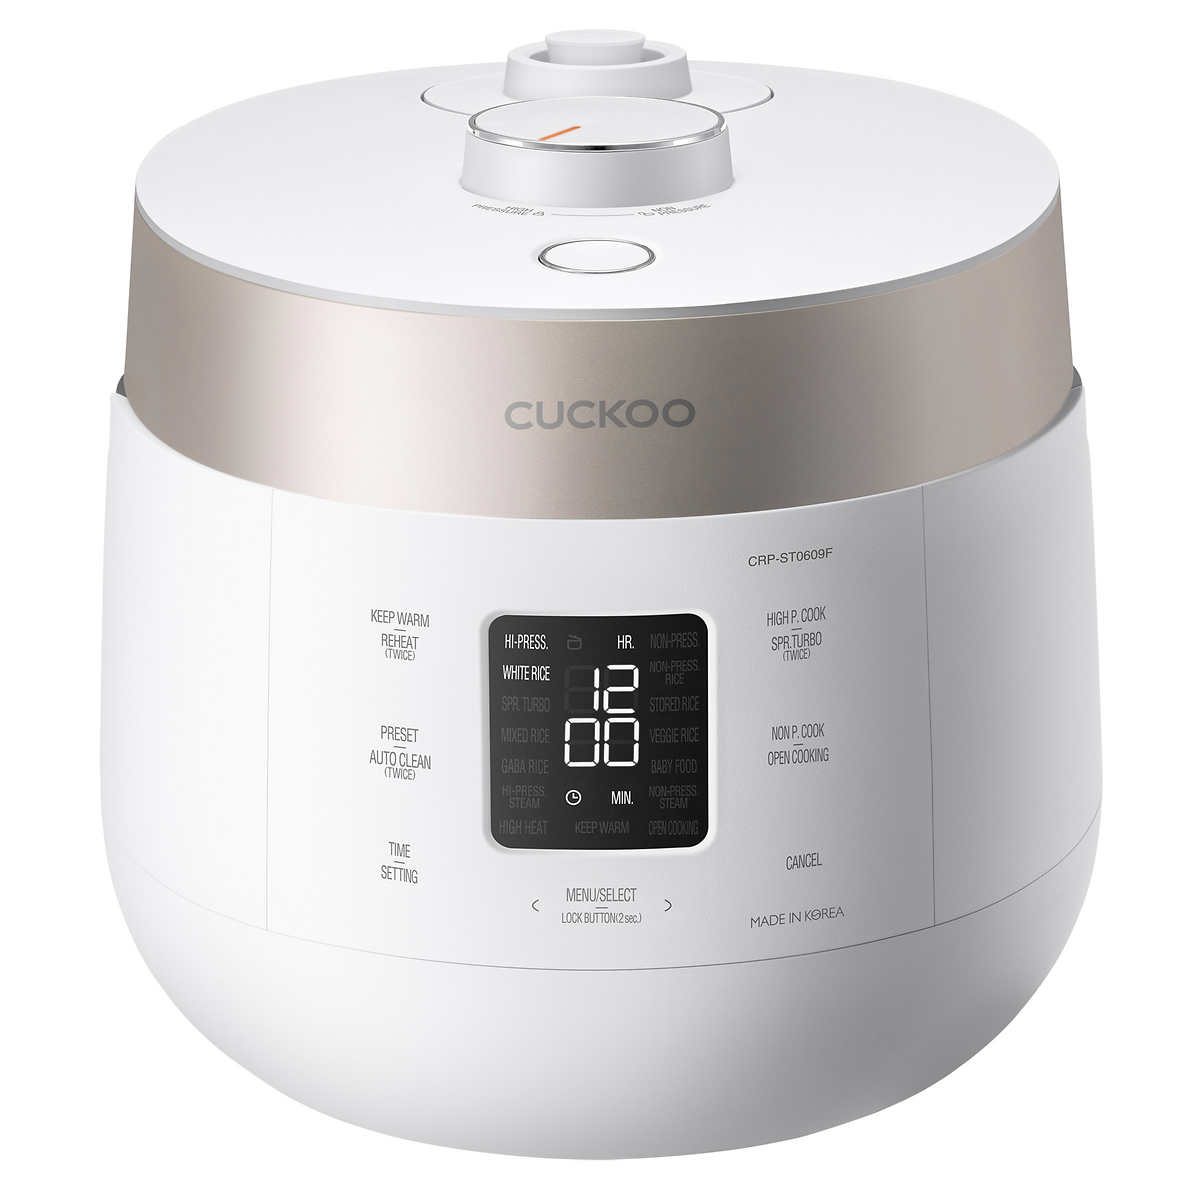 Cuckoo 6-Cup Micom Rice Cooker Maker + Reviews